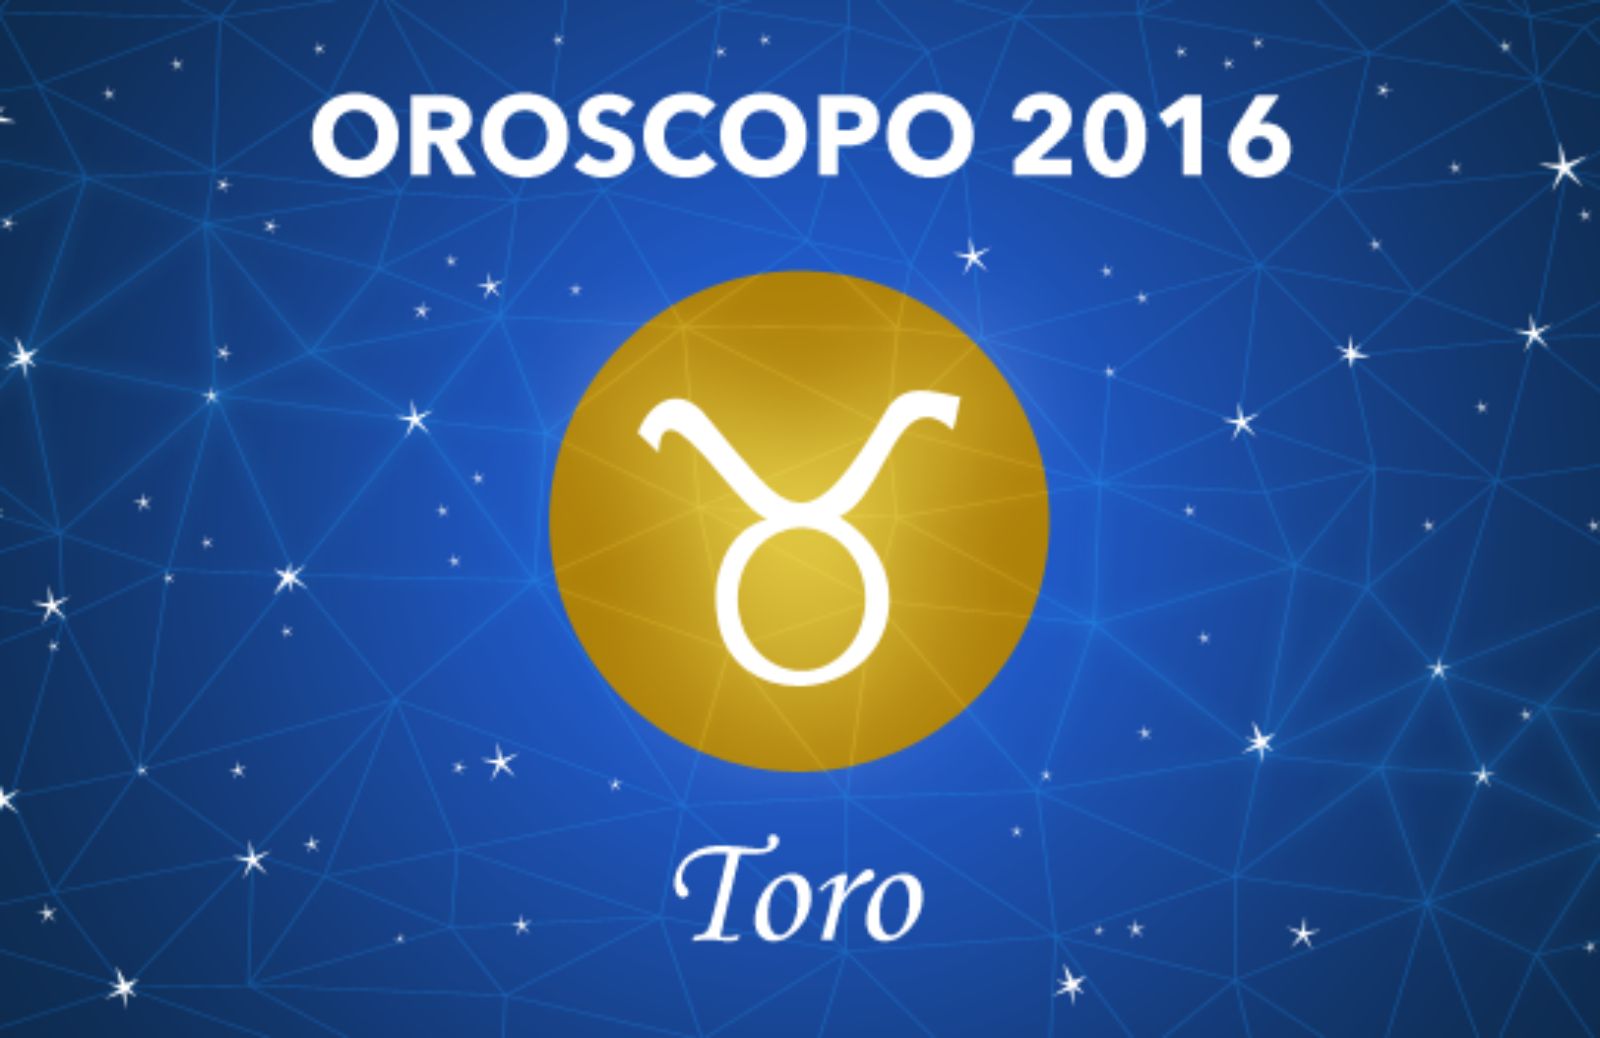 Oroscopo 2016 - Toro